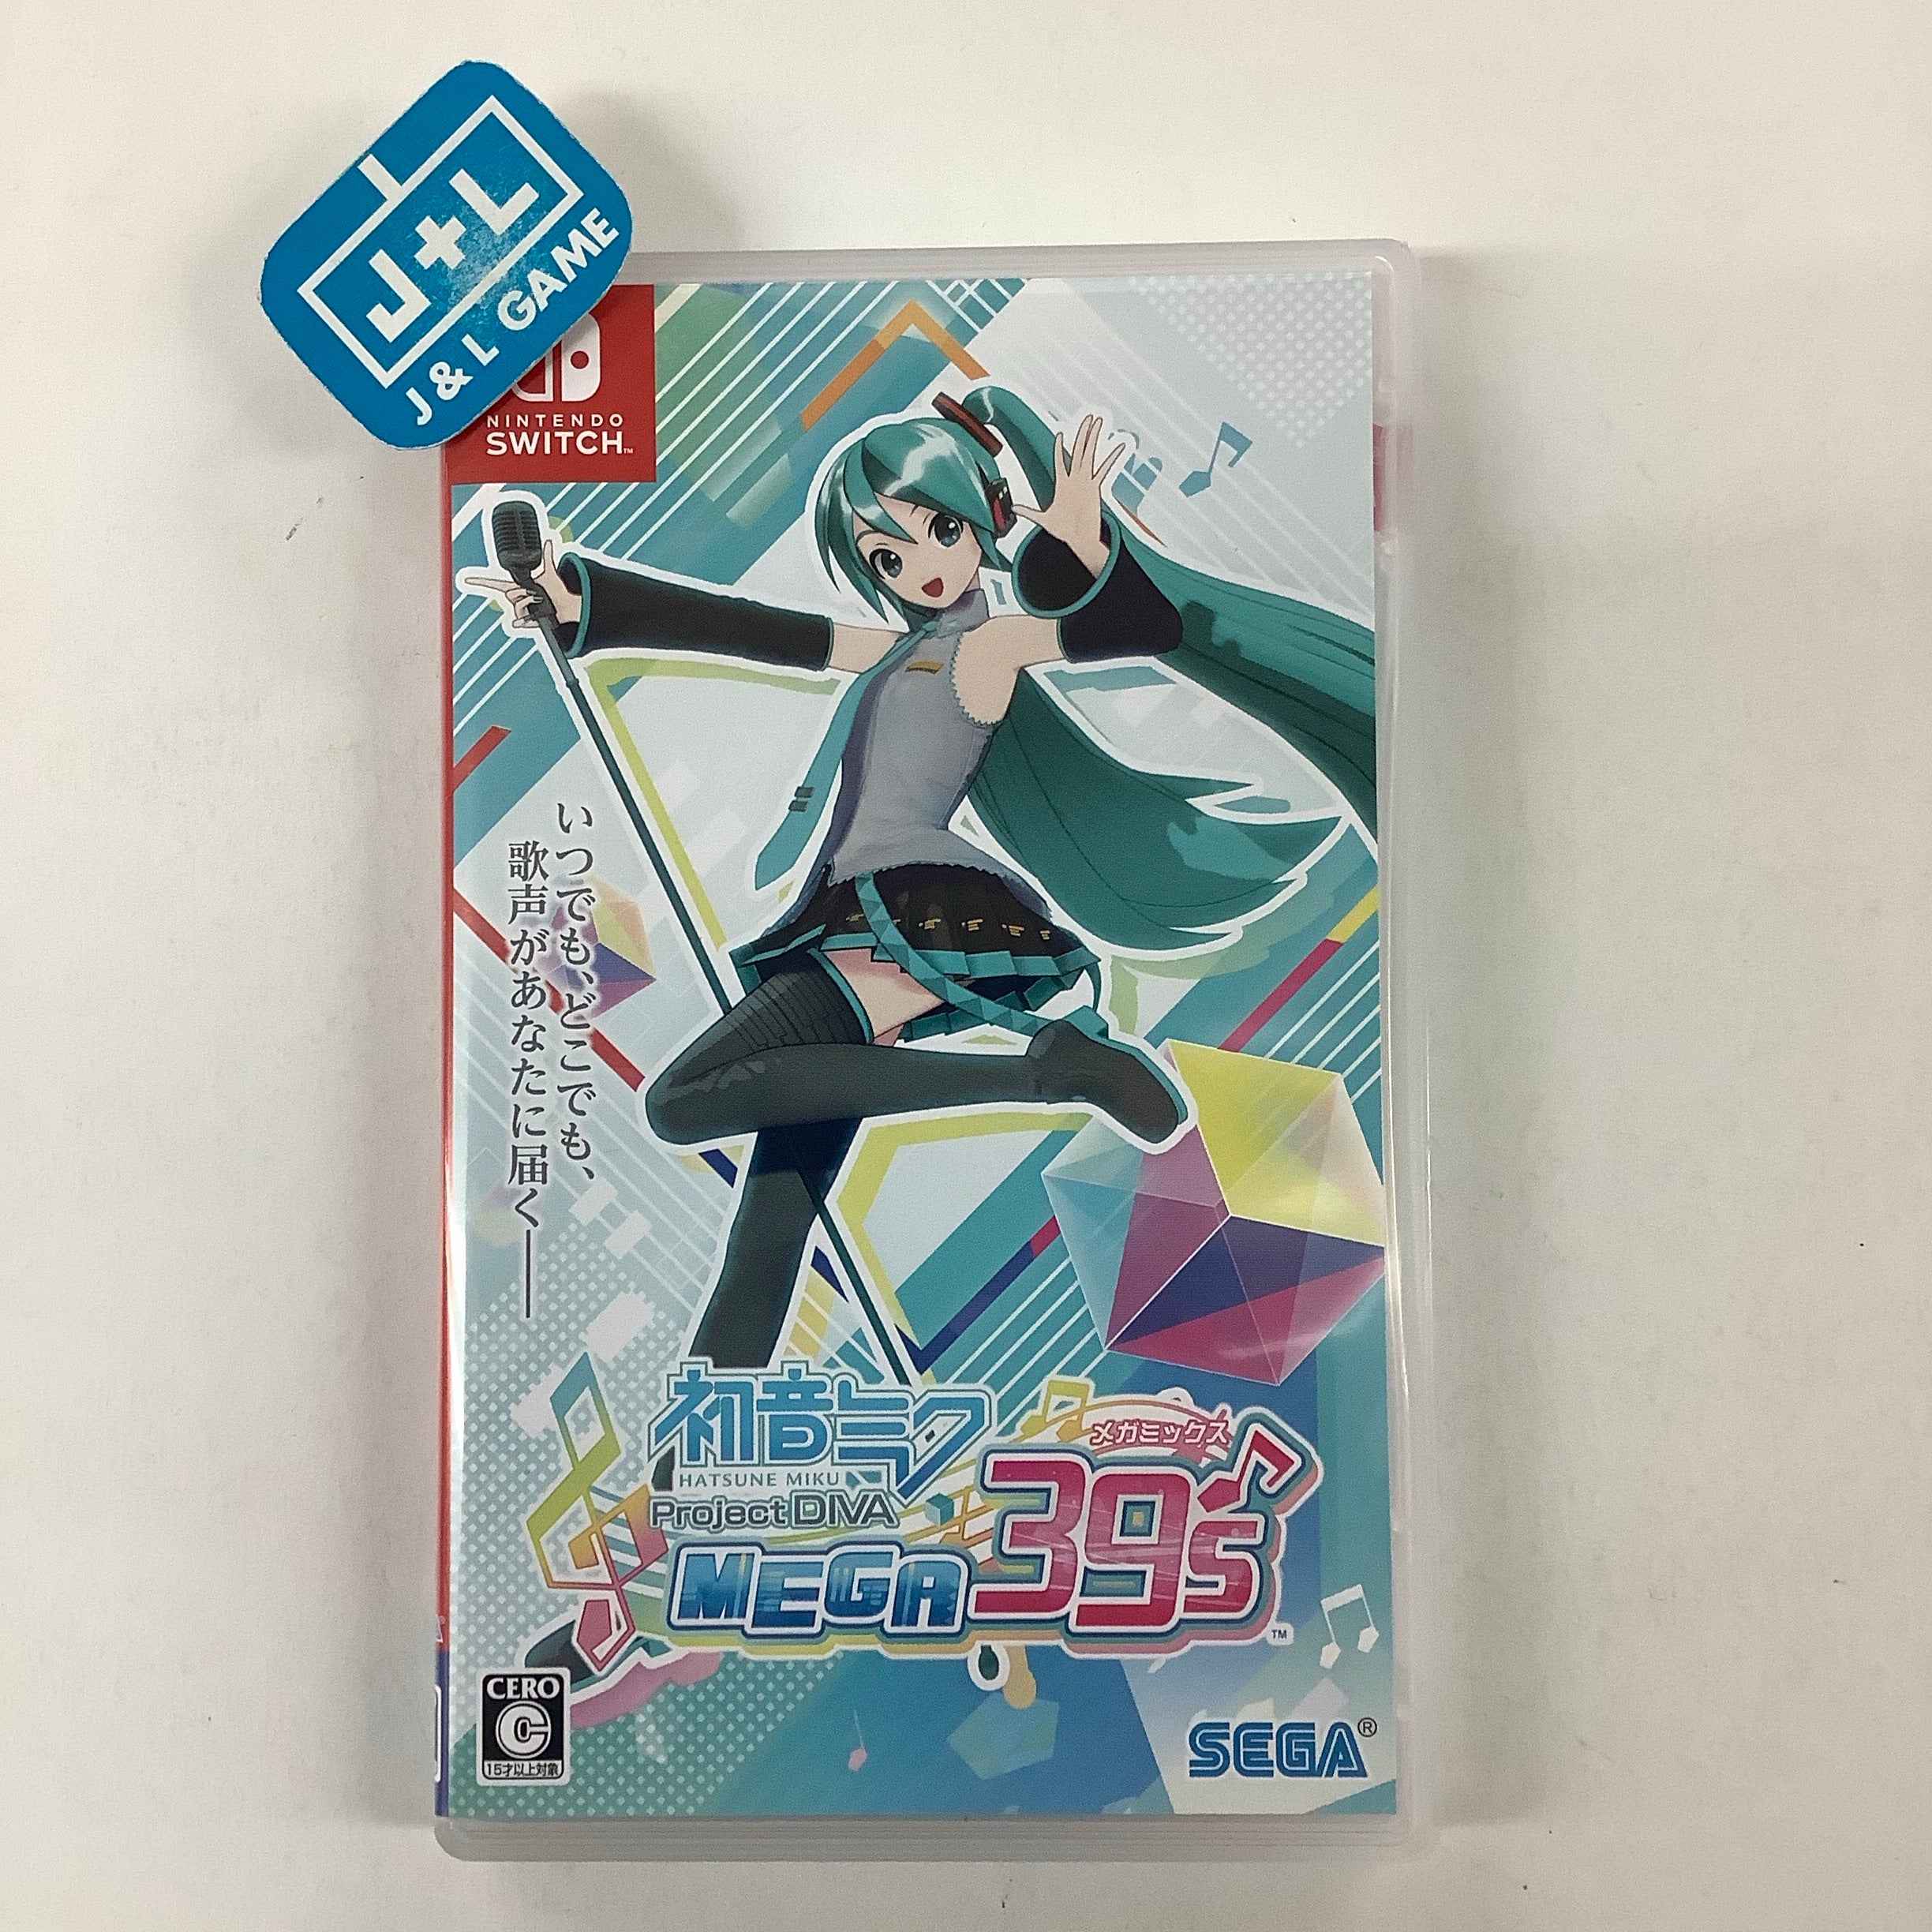 Hatsune Miku: Project Diva Mega39's - (NSW) Nintendo Switch [Pre-Owned] (Japanese Import) Video Games SEGA   